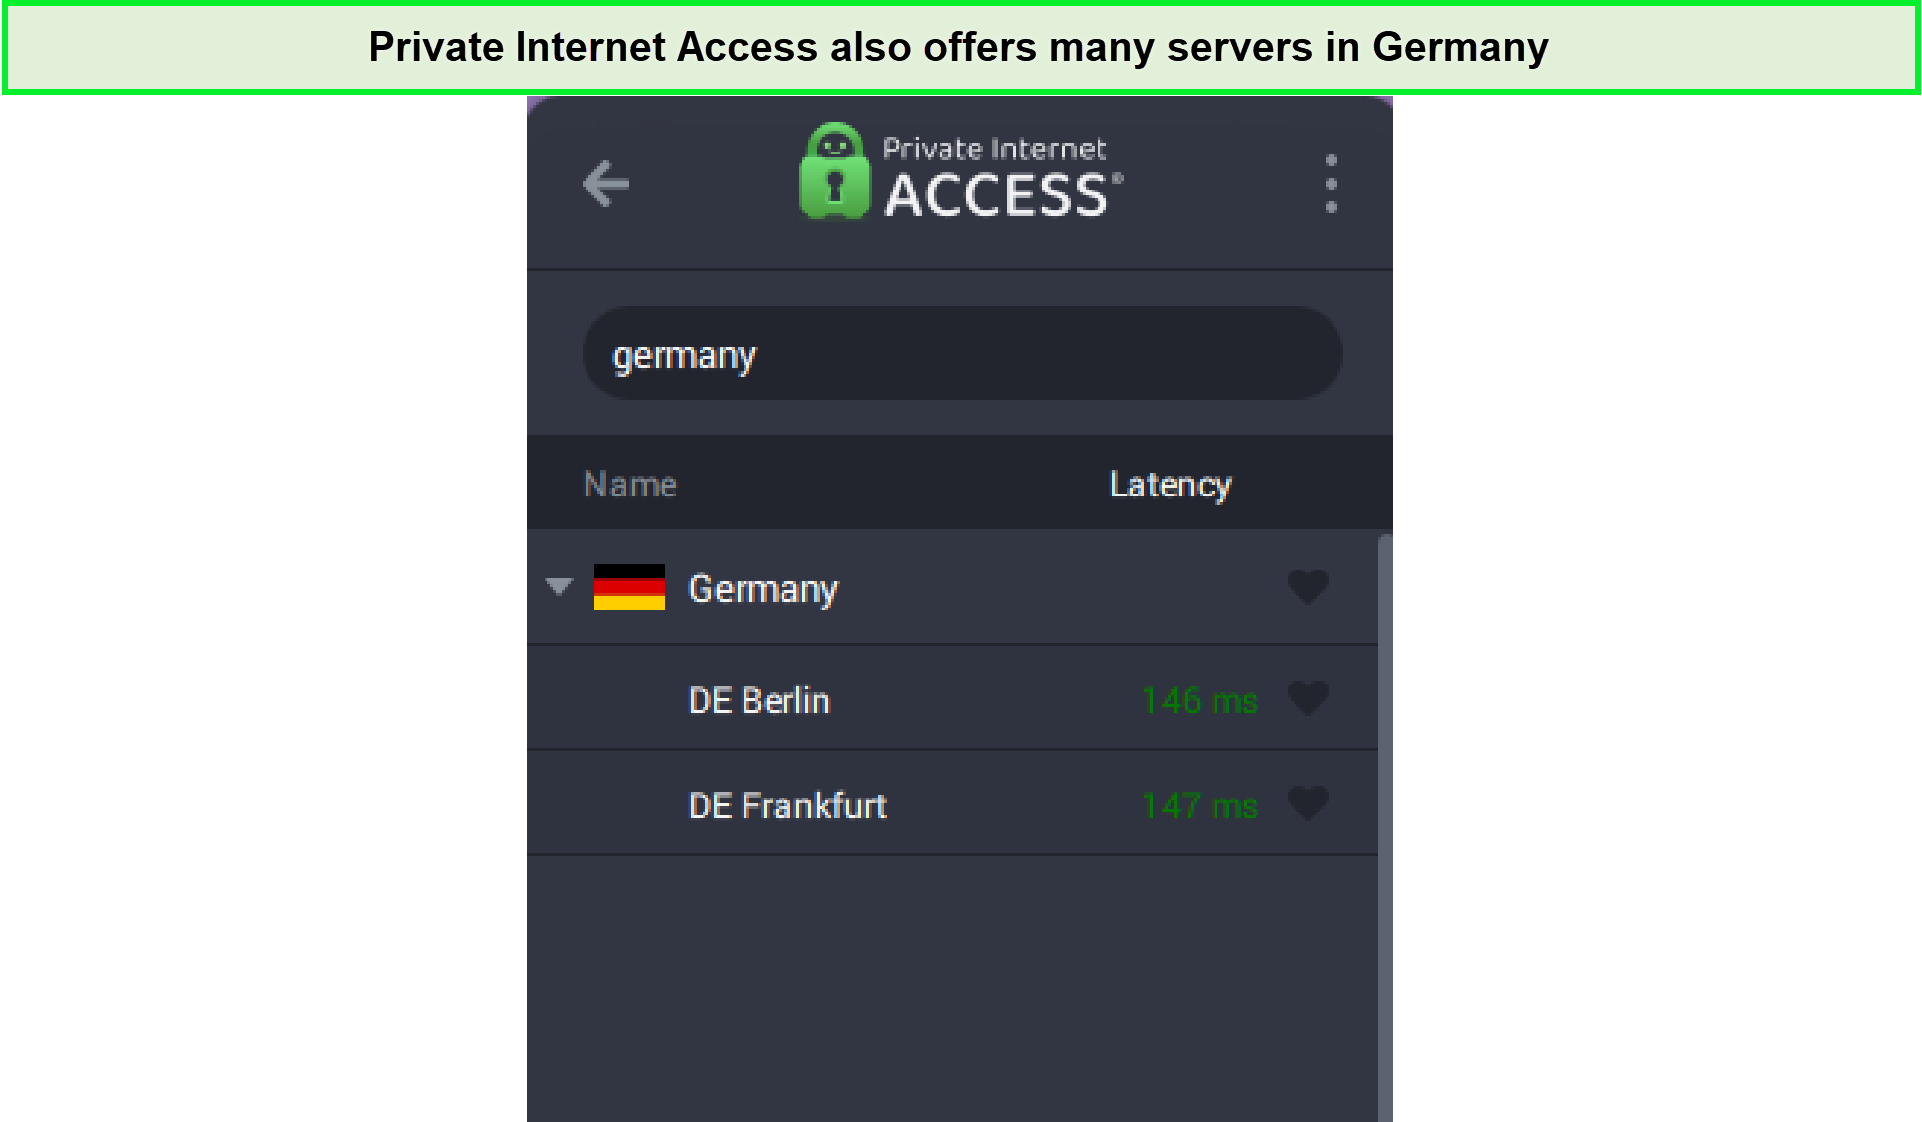 pia-german-servers-For German Users